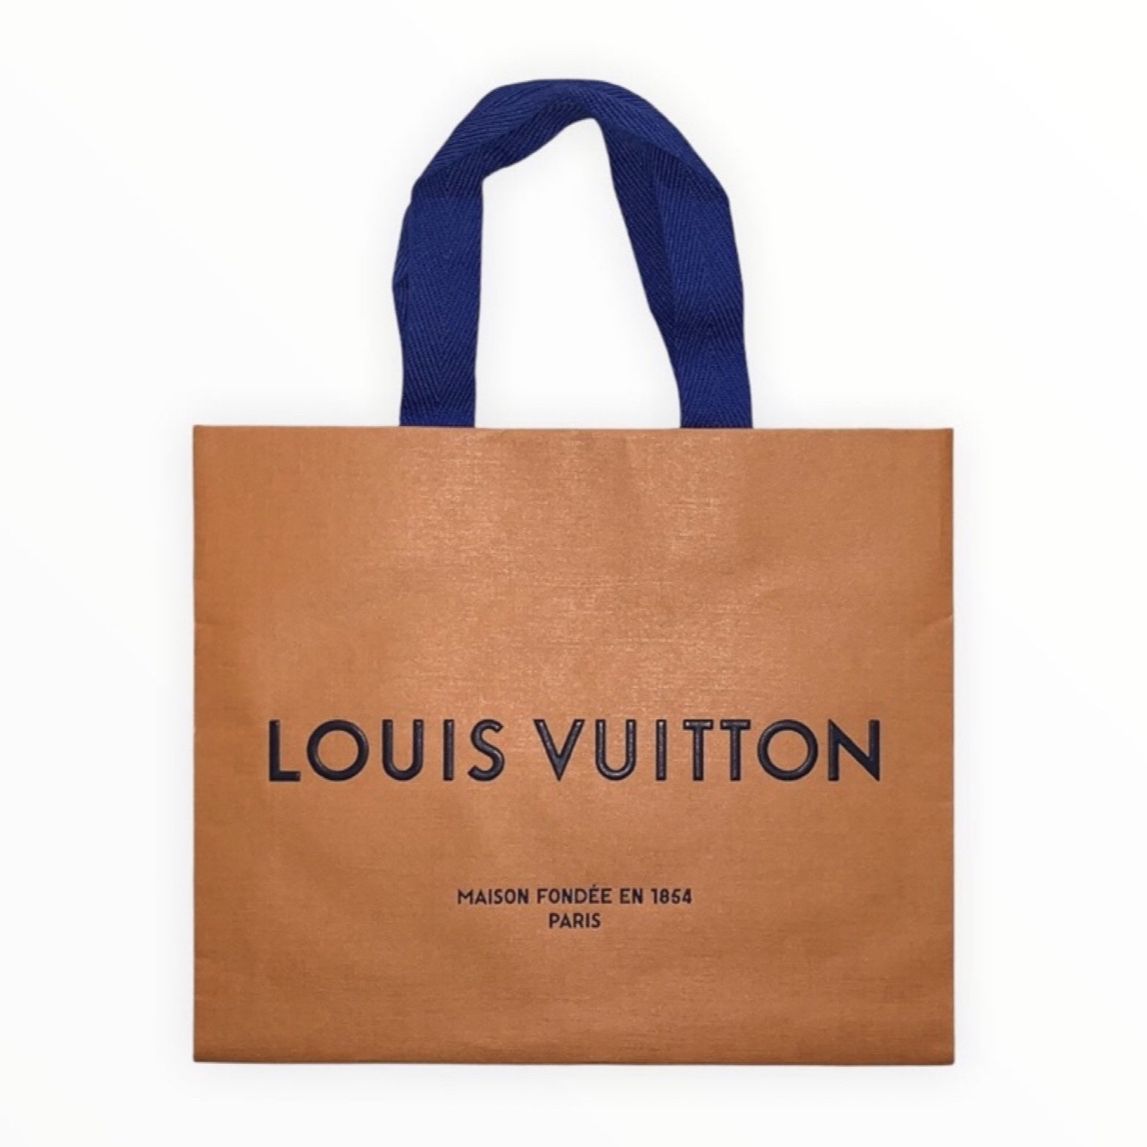 Best Deals for Louis Vuitton Gift Paper Bag